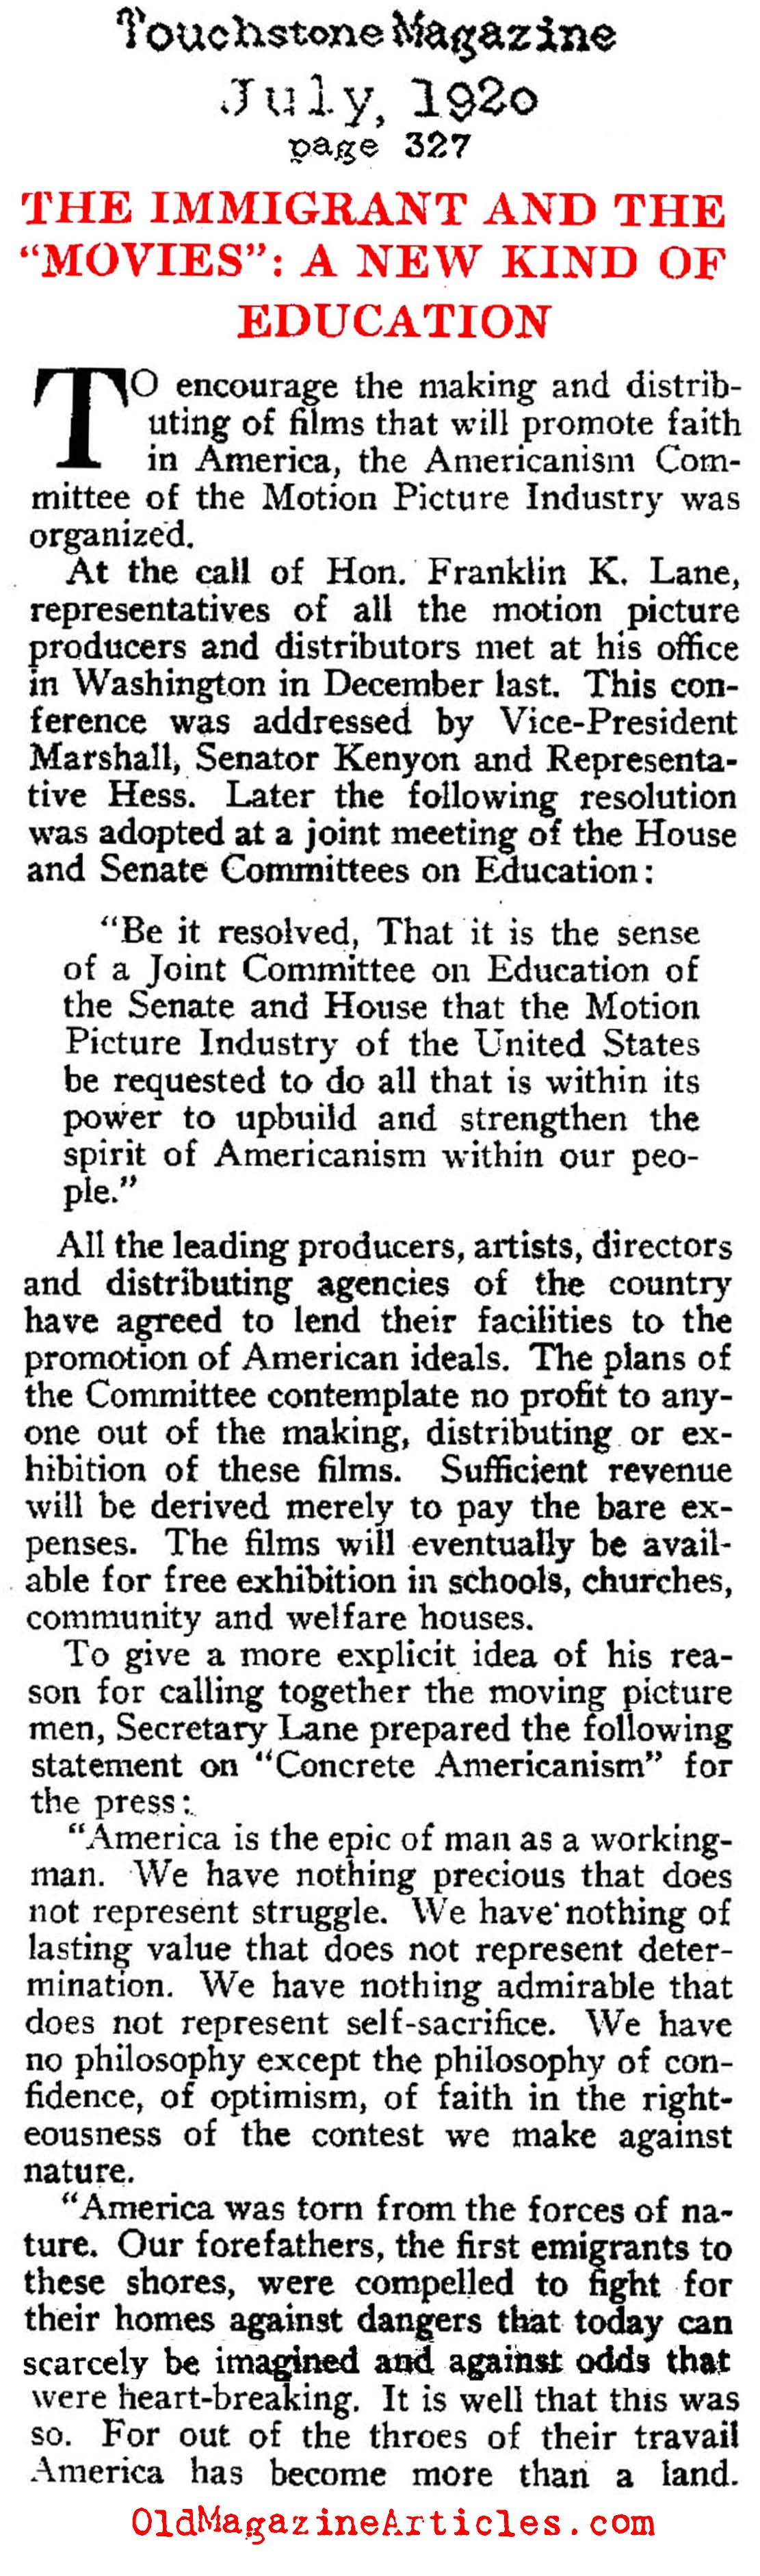 Movies will Promote Americanism (Touchstone Magazine, 1920)